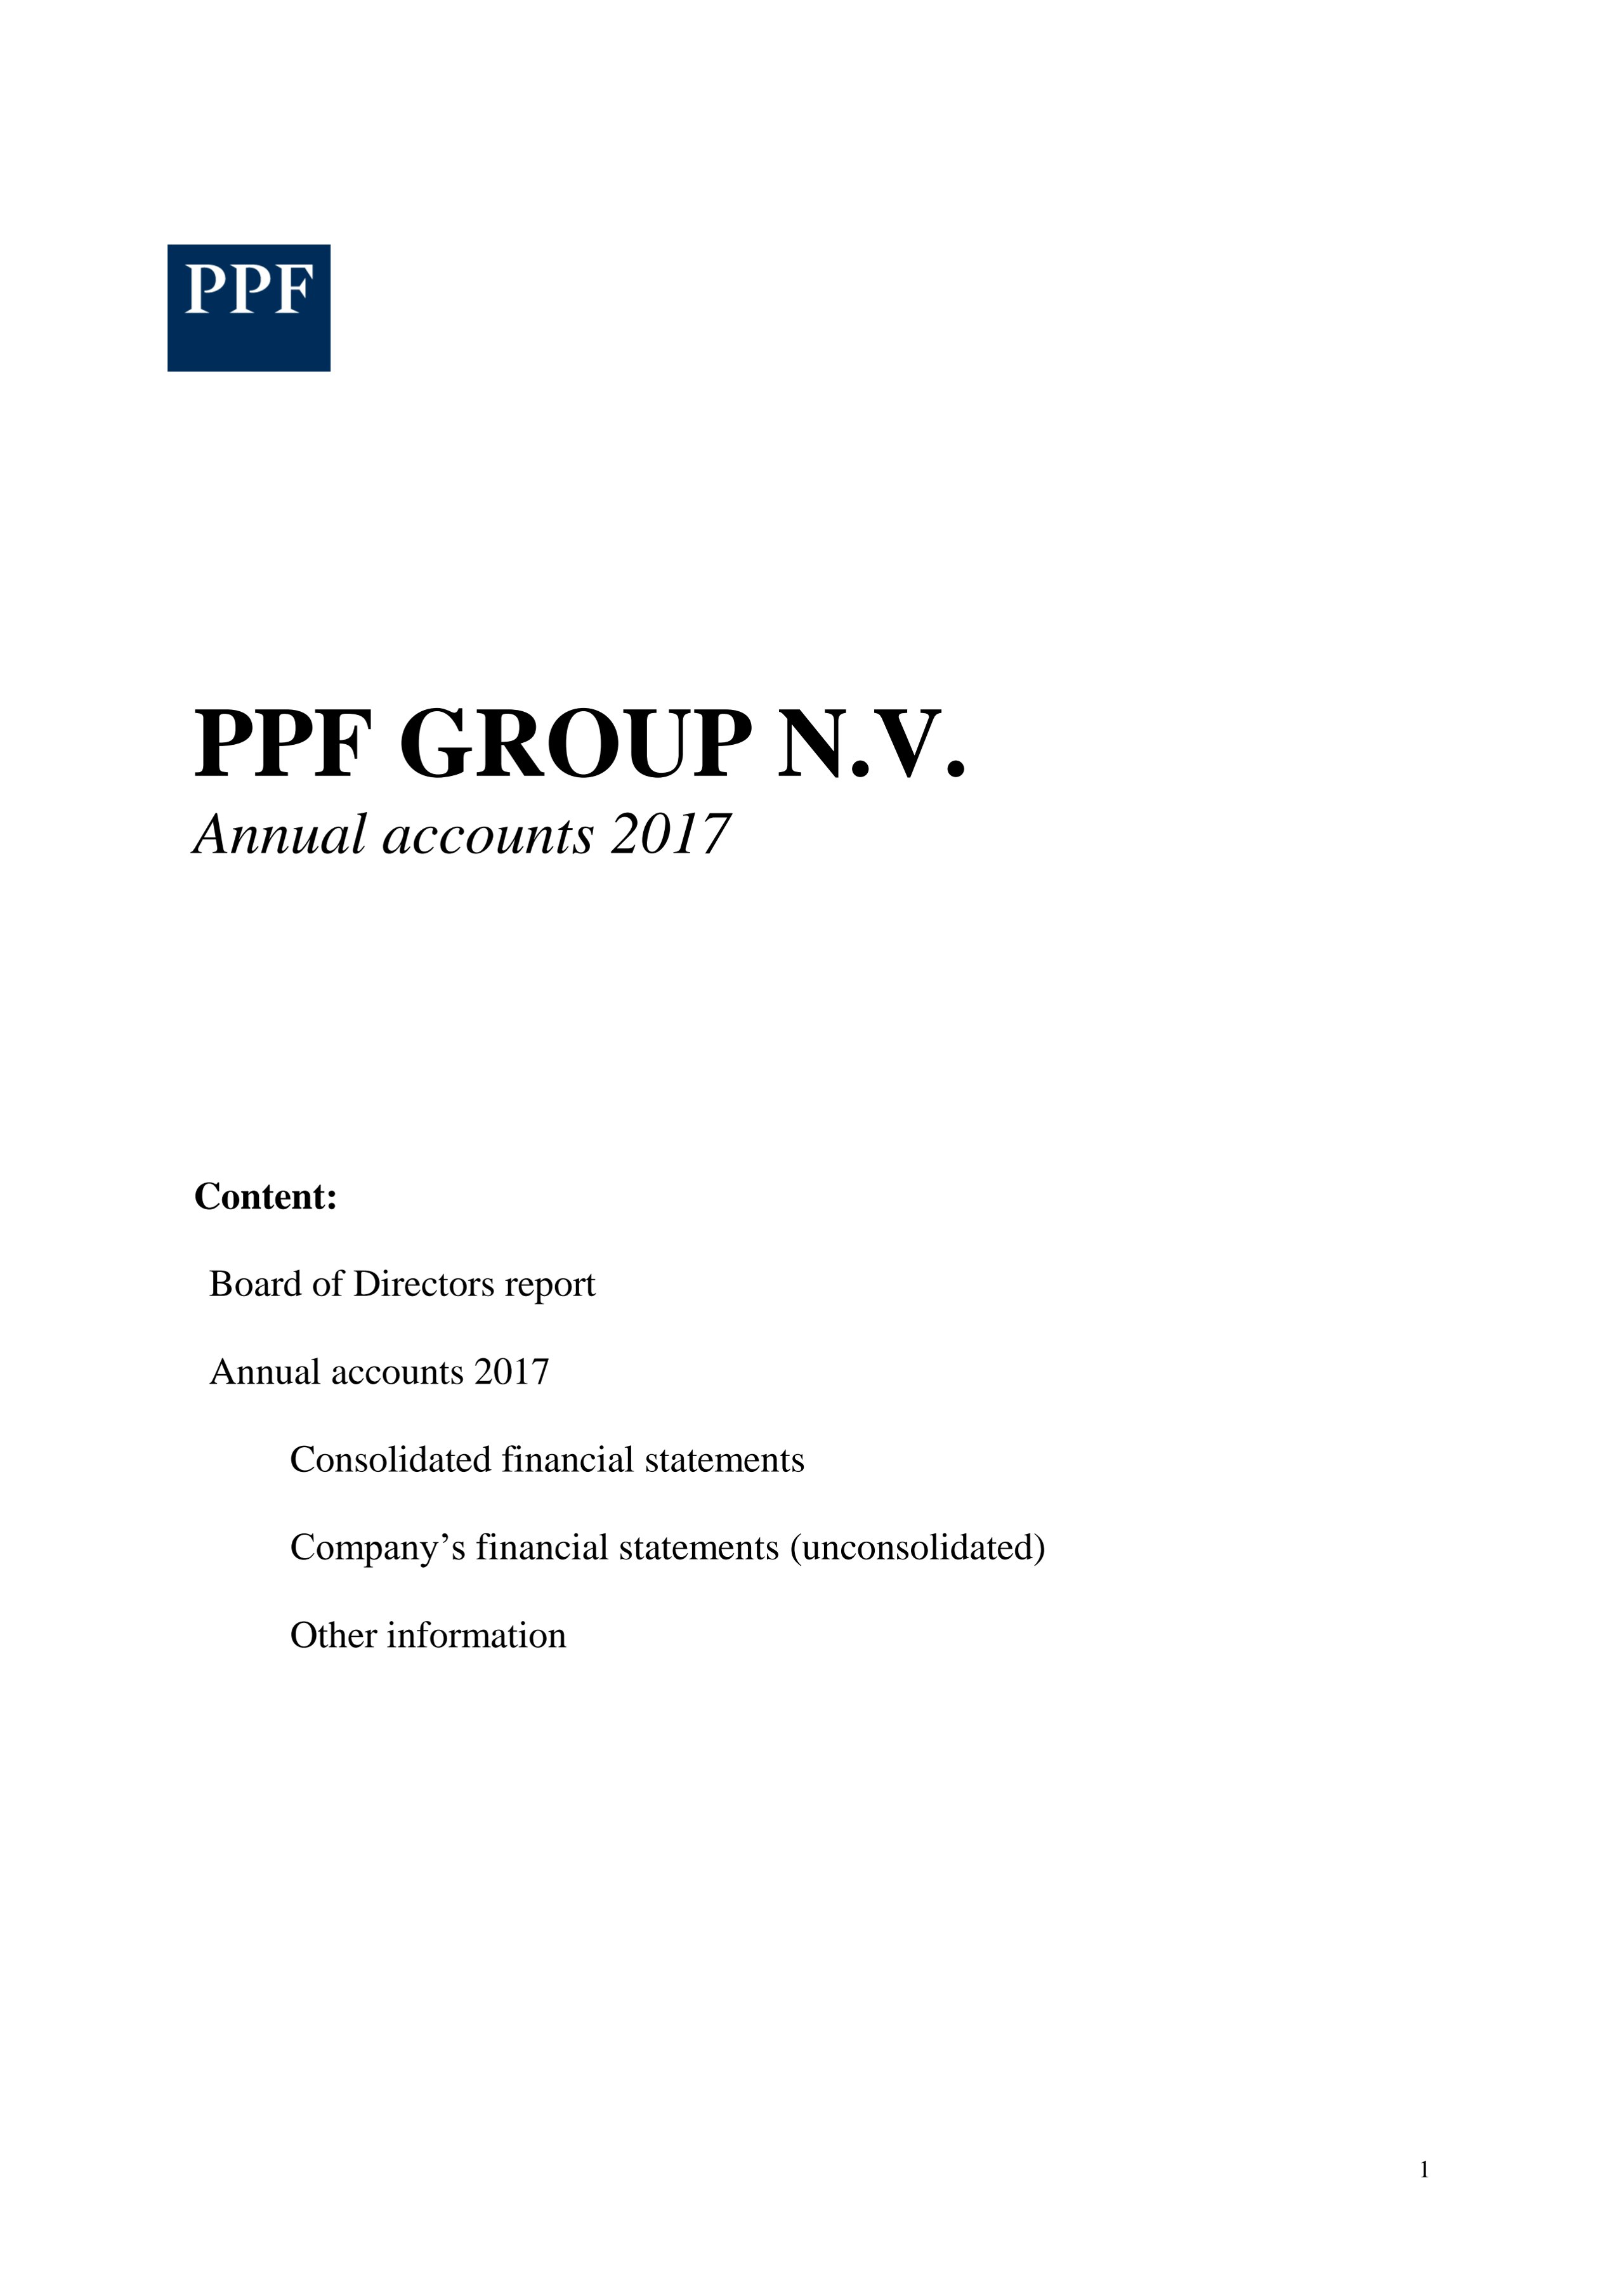 PPF Group N.V. Annual Accounts 2017 (4/6/2017)